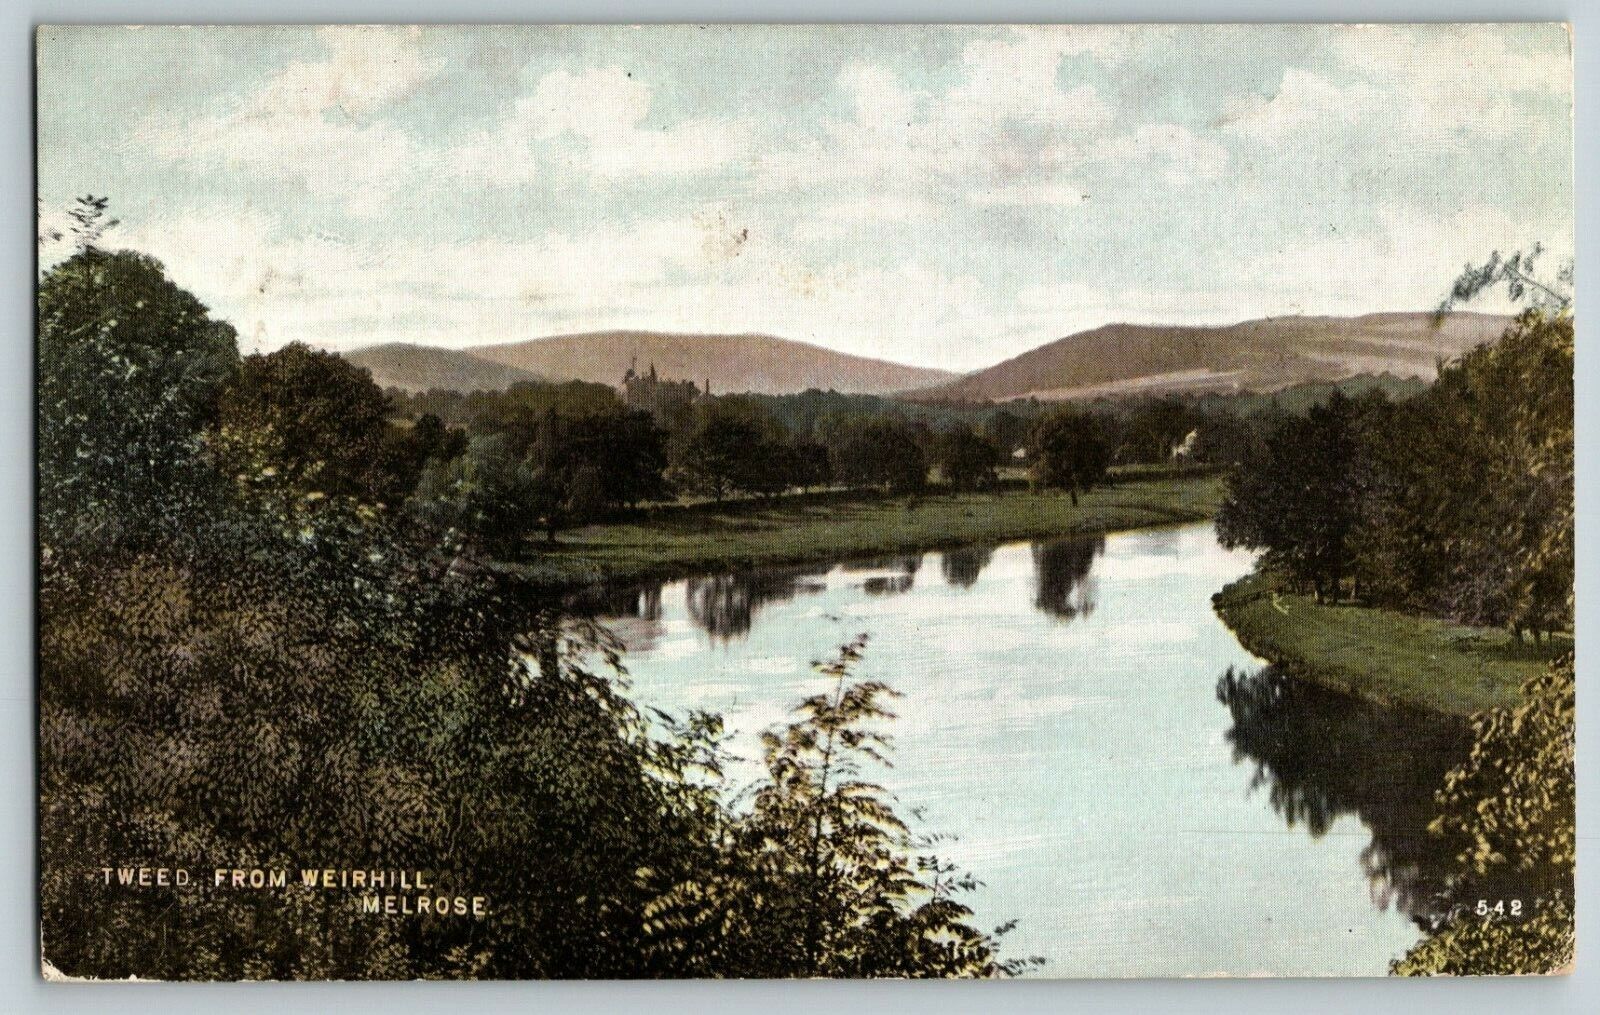 VTG 1900s Divided Back Tweed from Weirhill Melrose Scotland UK Postcard